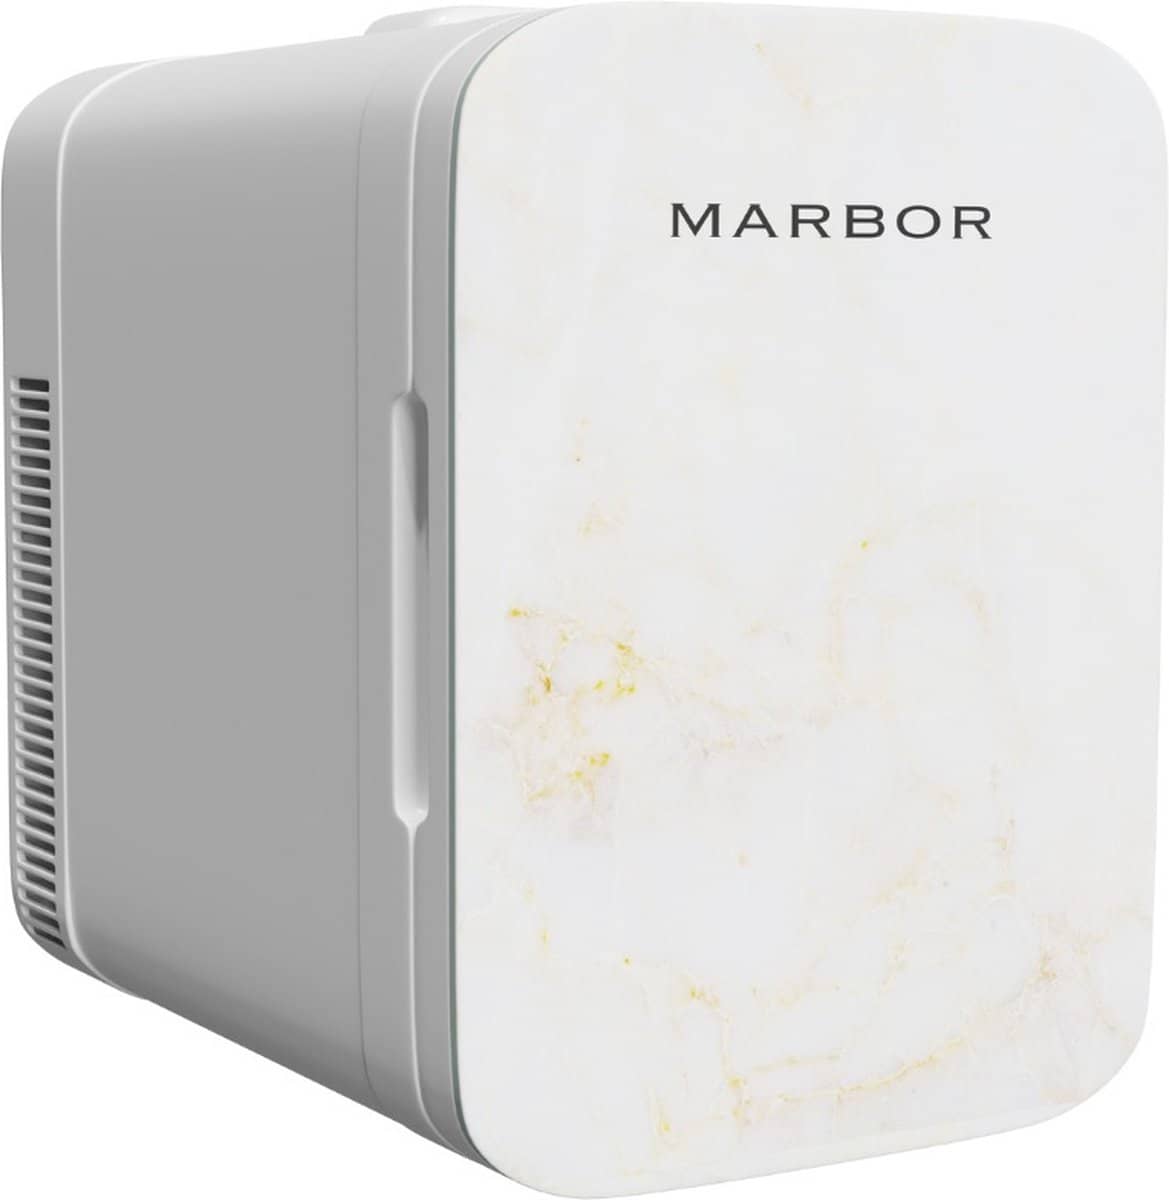 Marbor FW210 Pro – 10L Mini Fridge. Een echte mini koelkast